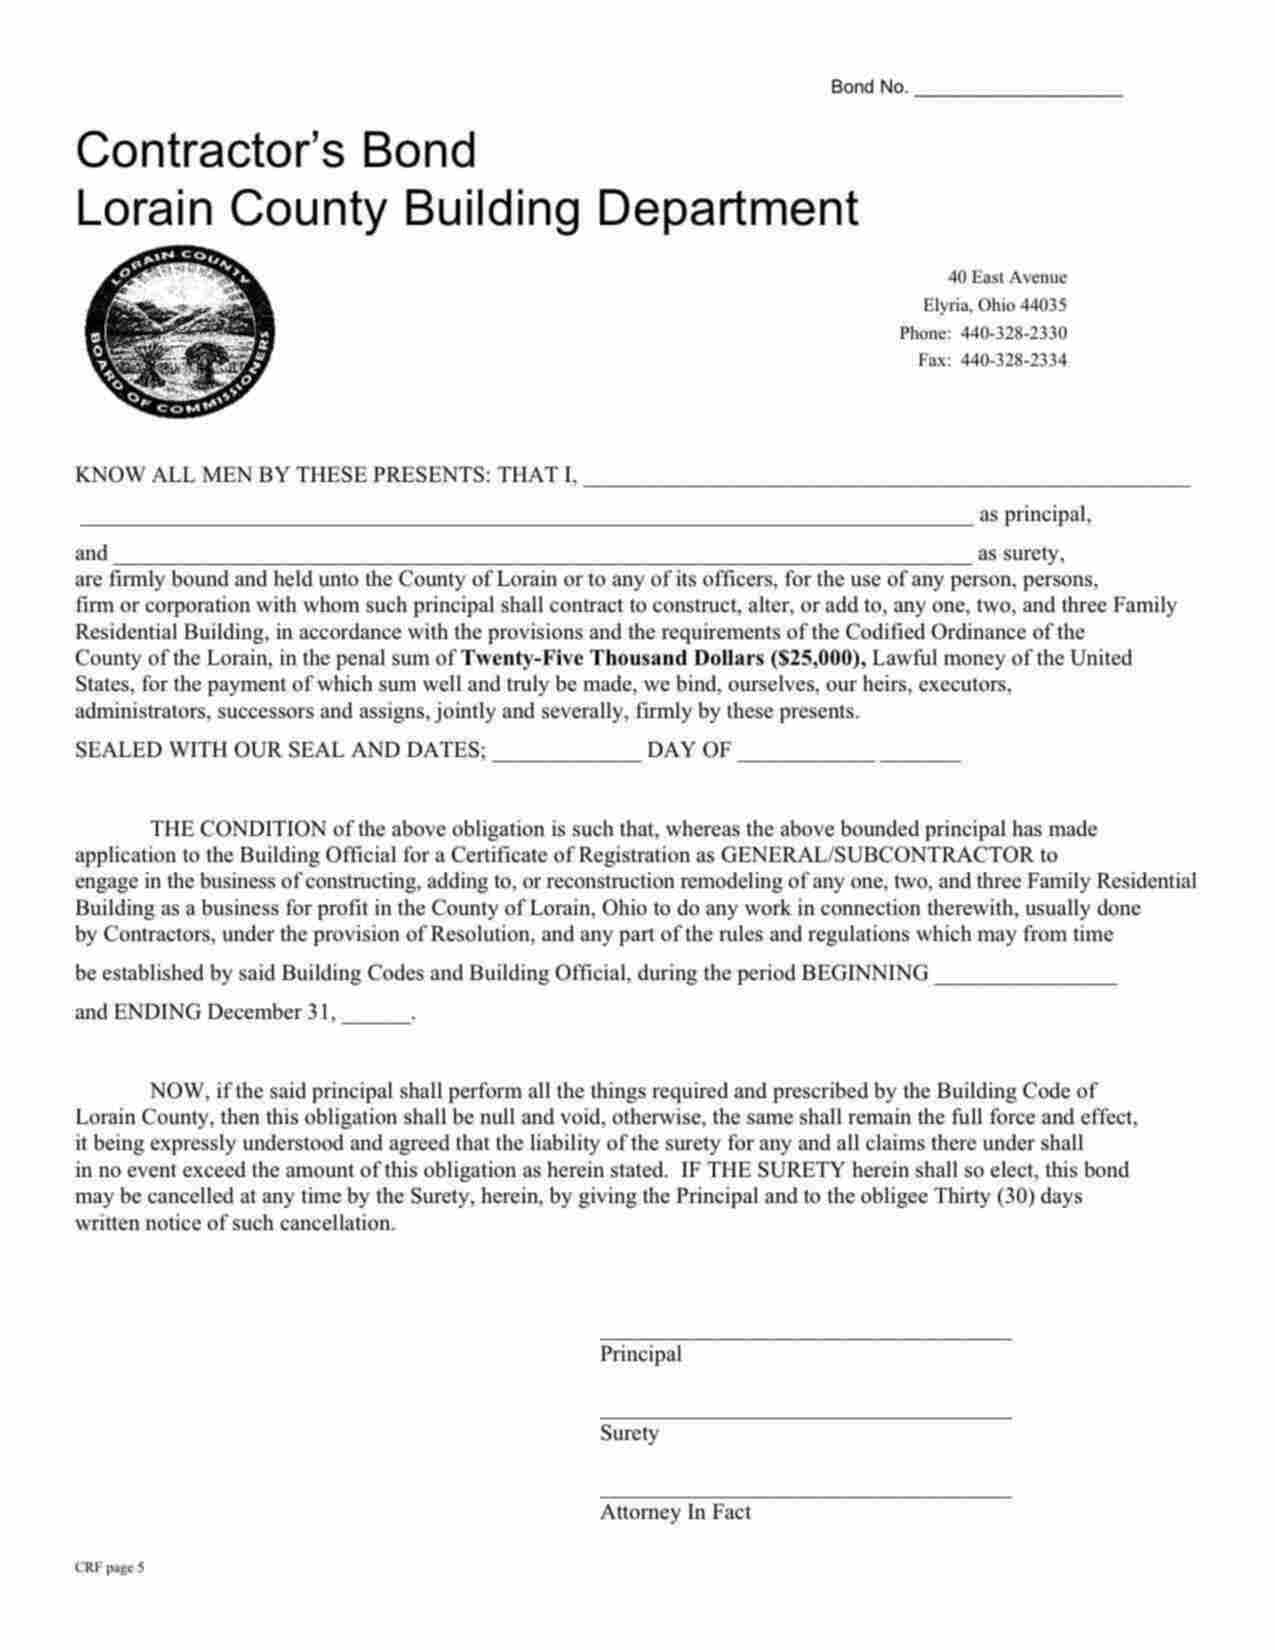 Ohio General/Subcontractor Registration Bond Form